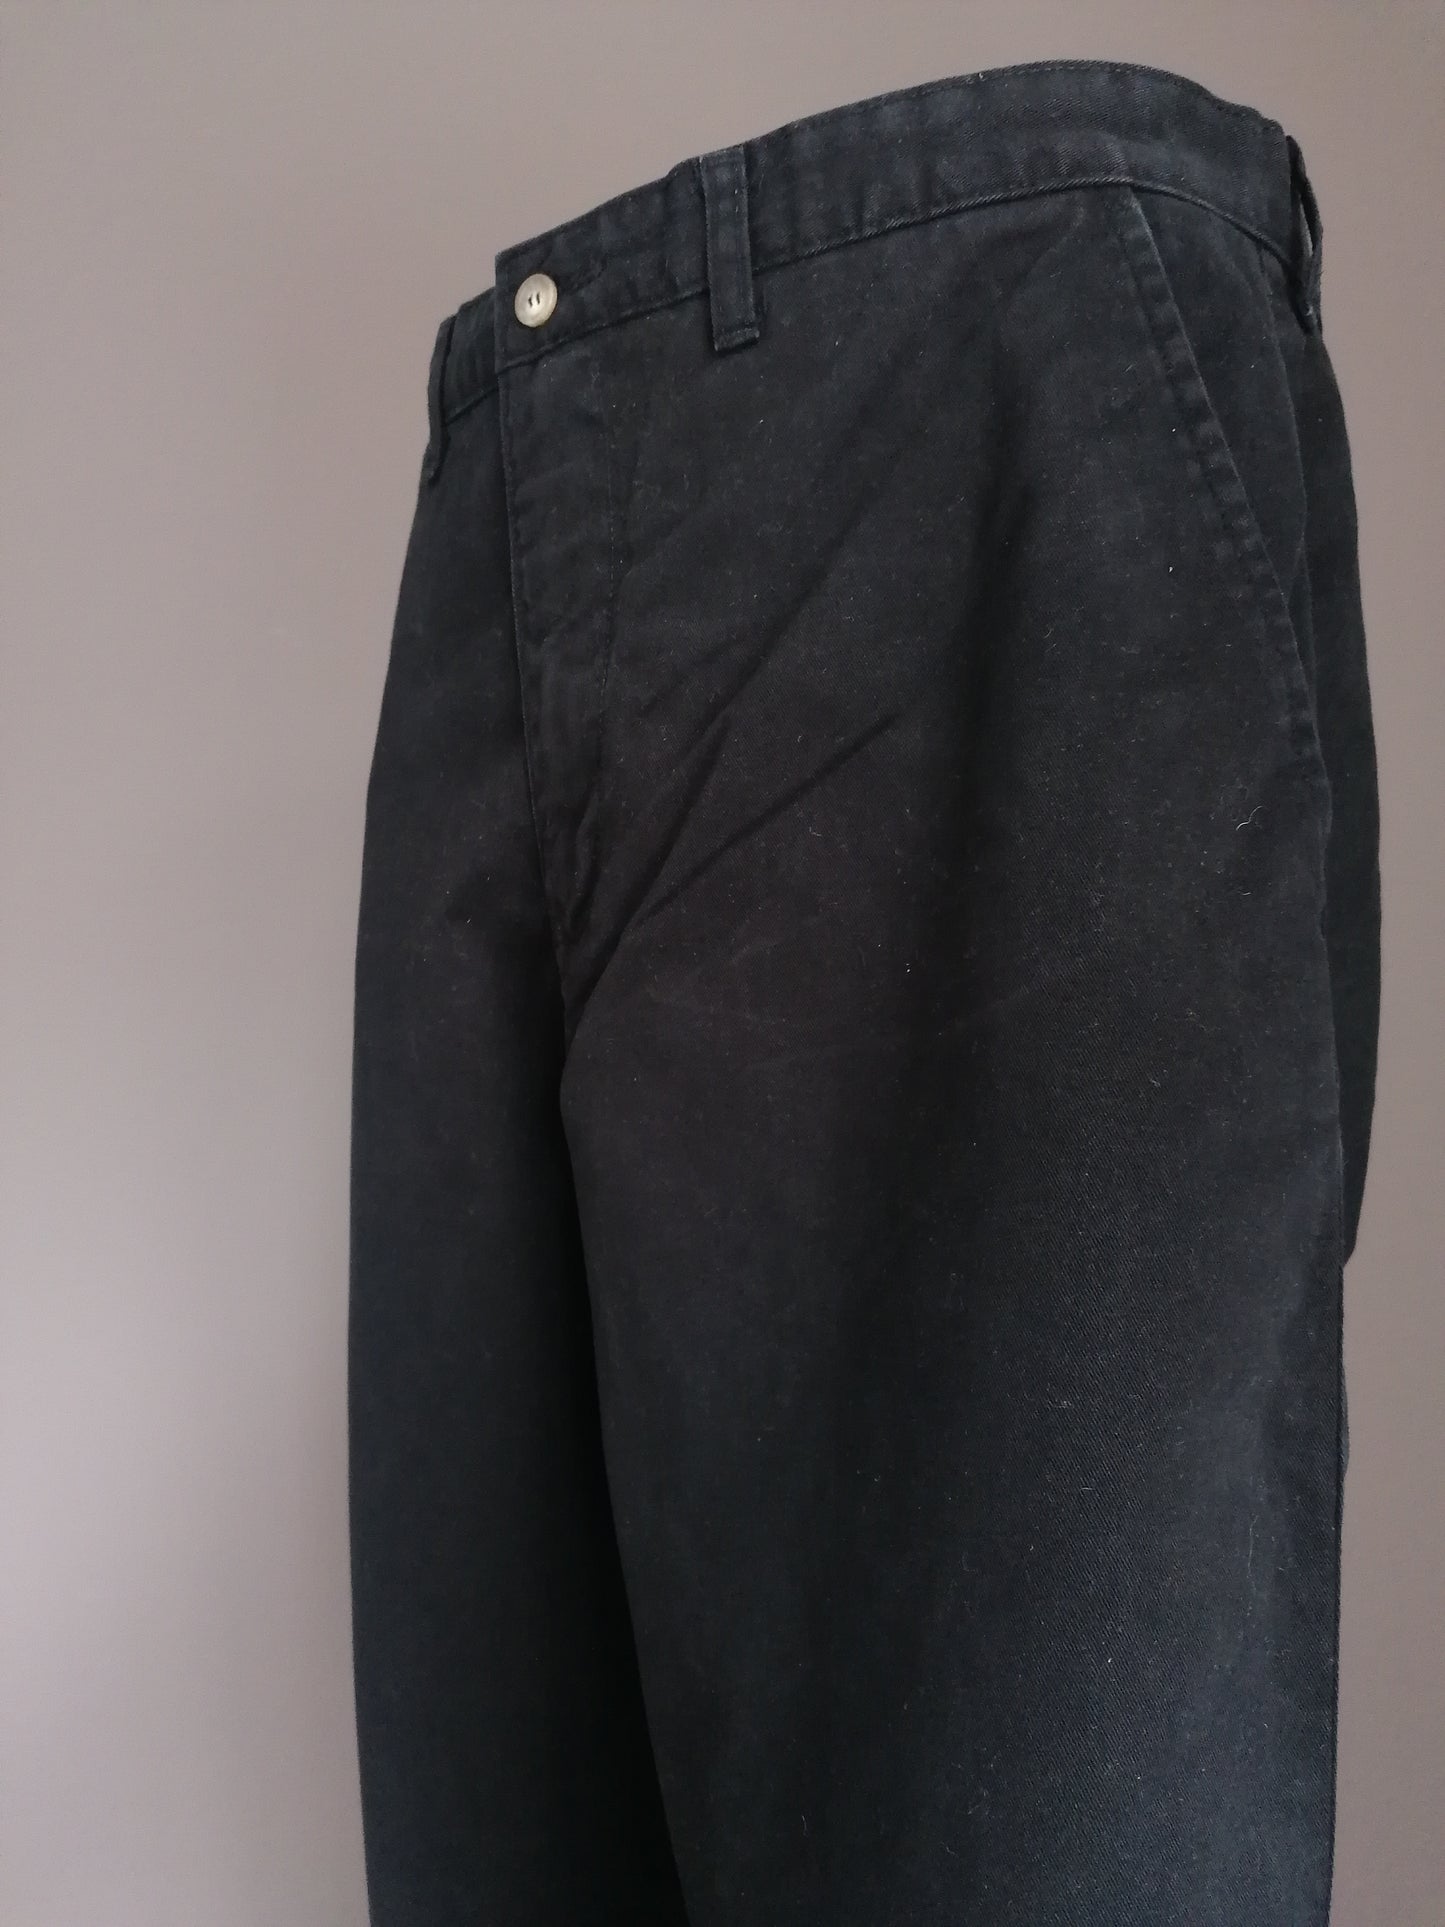 Jeans Maverick. Color negro. Tamaño W36 - L32. ¡¡Cintura alta!!